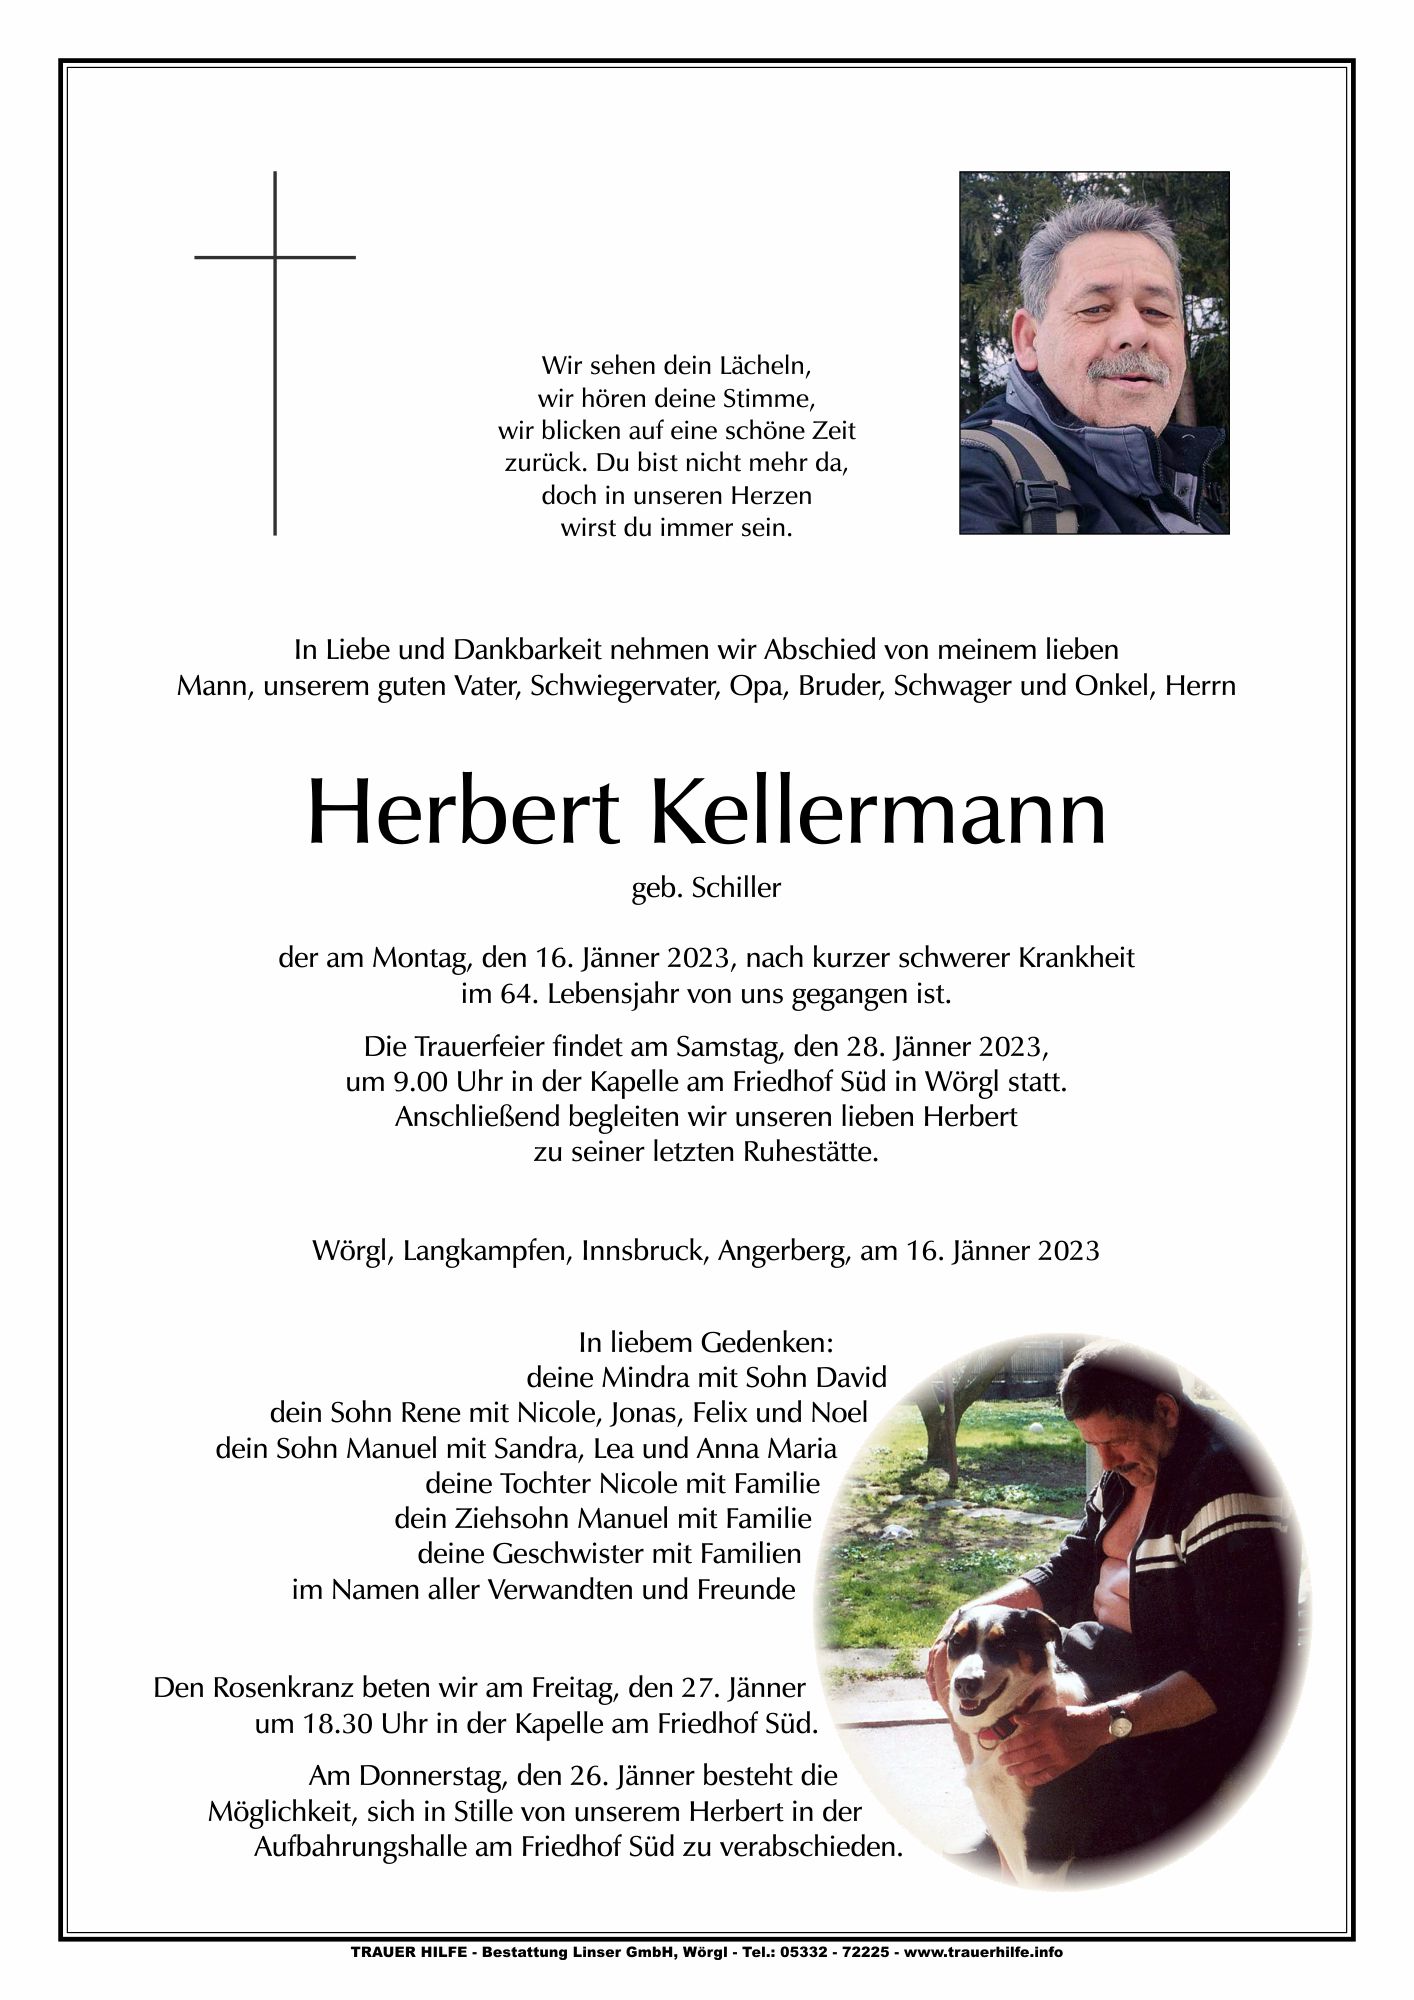 Herbert Kellermann